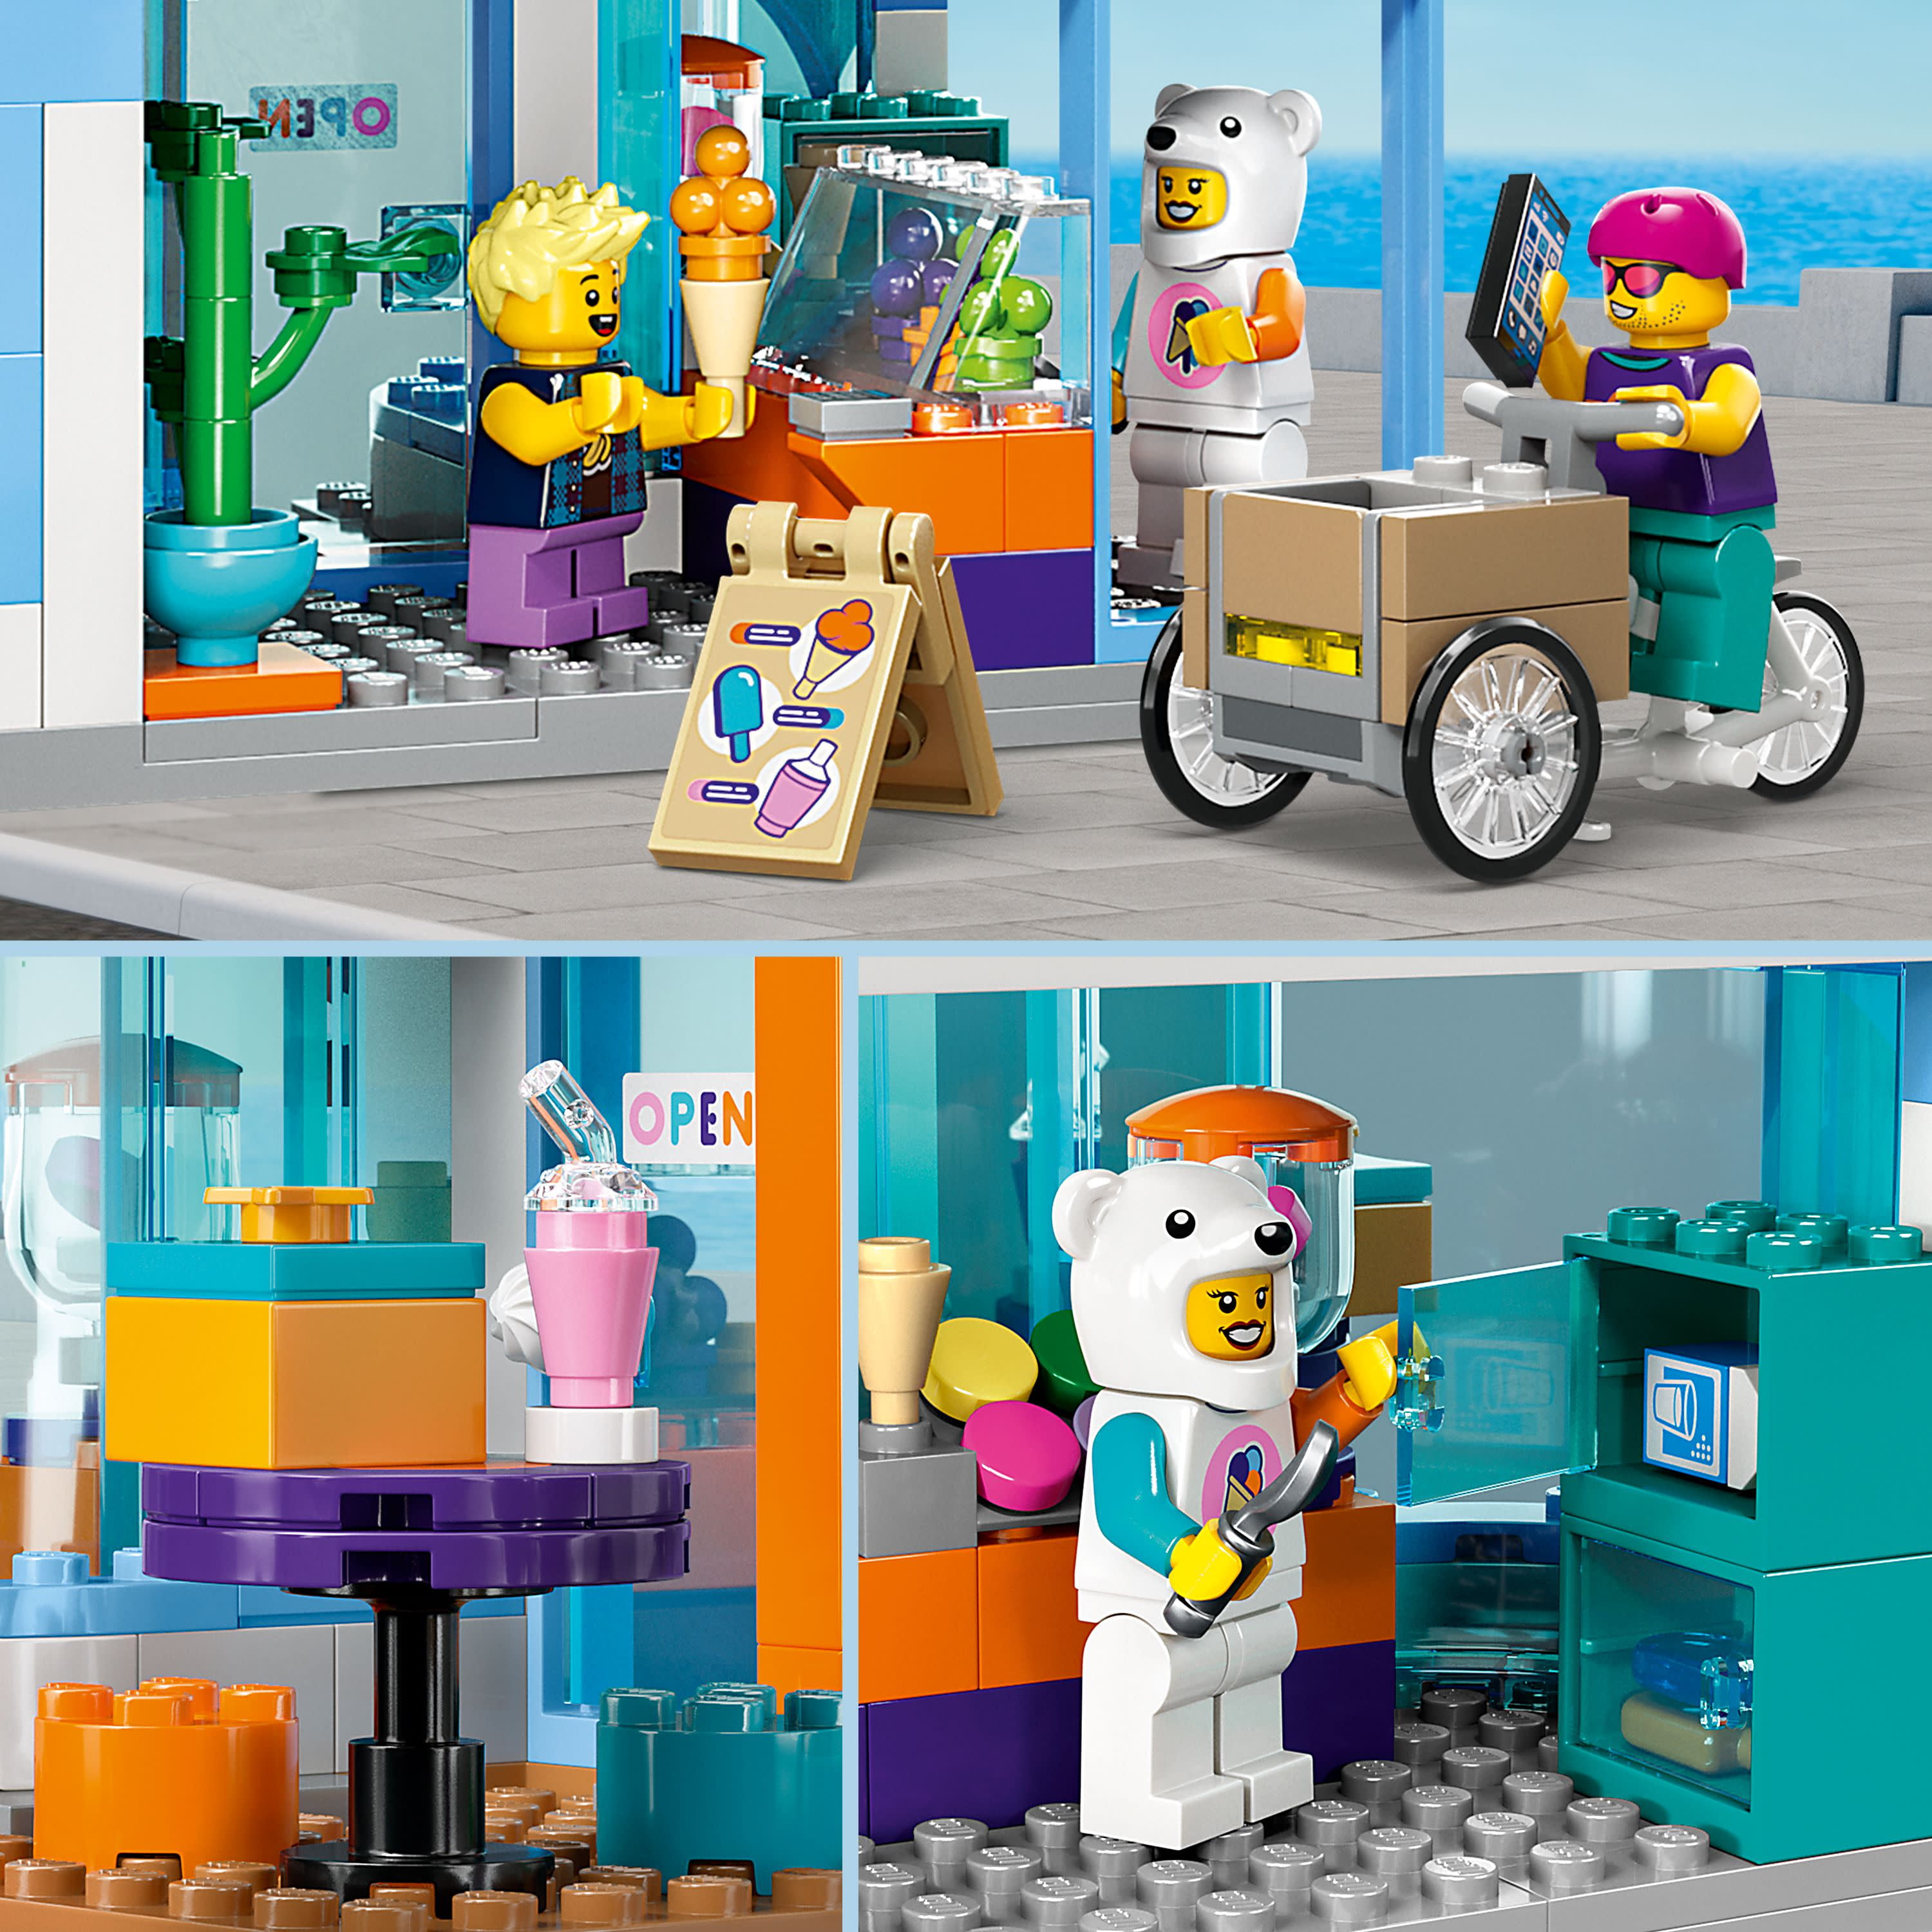 Lego City Ice-cream Shop Pretend Building Toy Set 60363 : Target